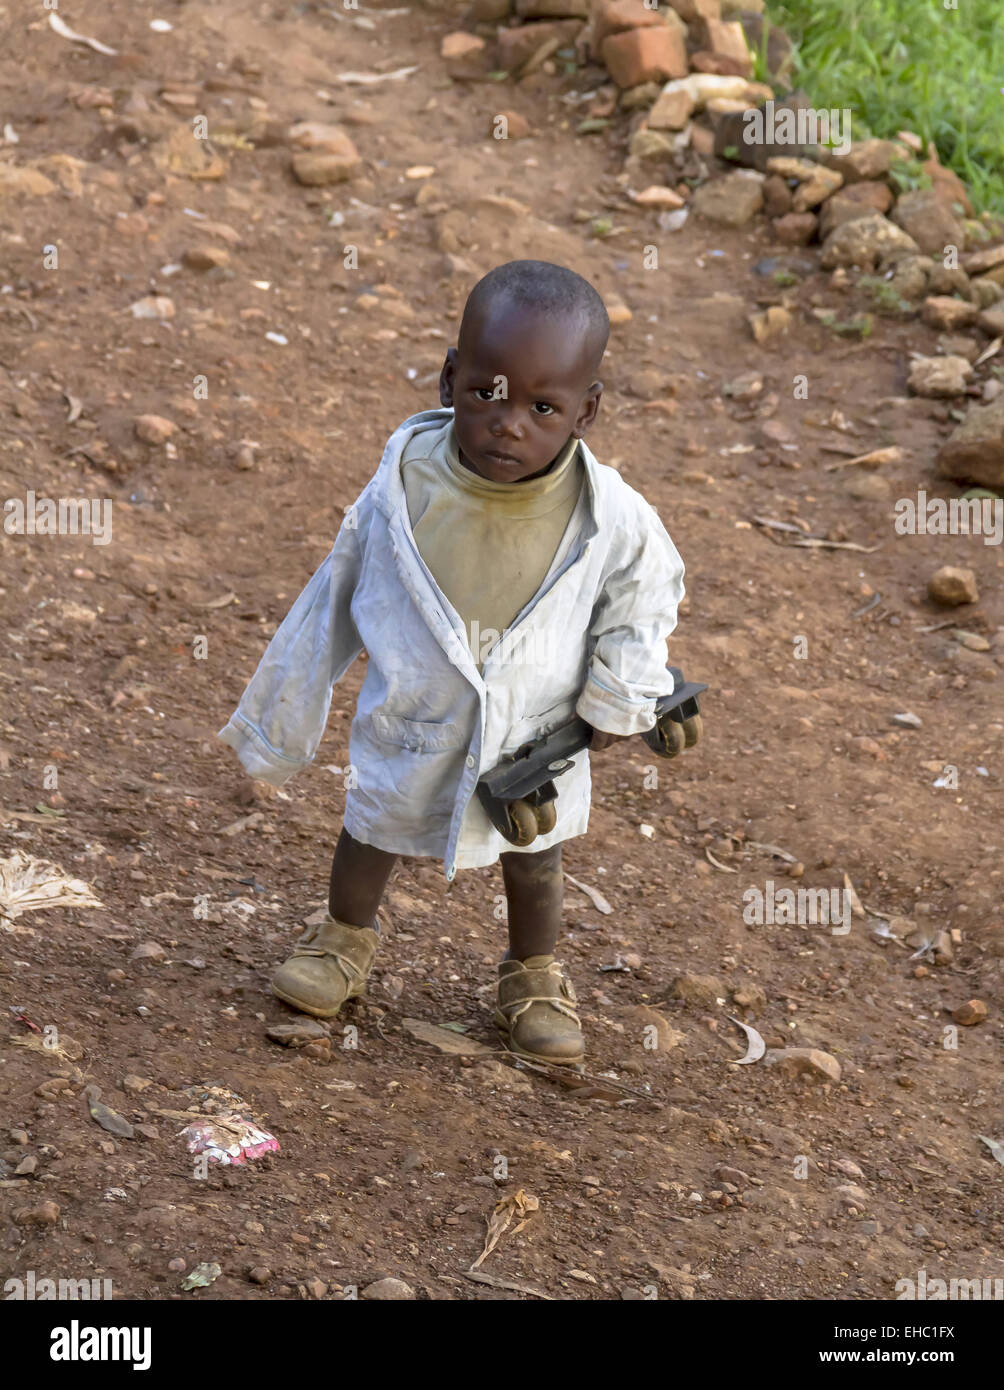 KIGALI, RWANDA - NOVEMBER 14, 2013: Unidentified child in a street in Kigali on November 14, 2013, Kingali, Rwanda Stock Photo